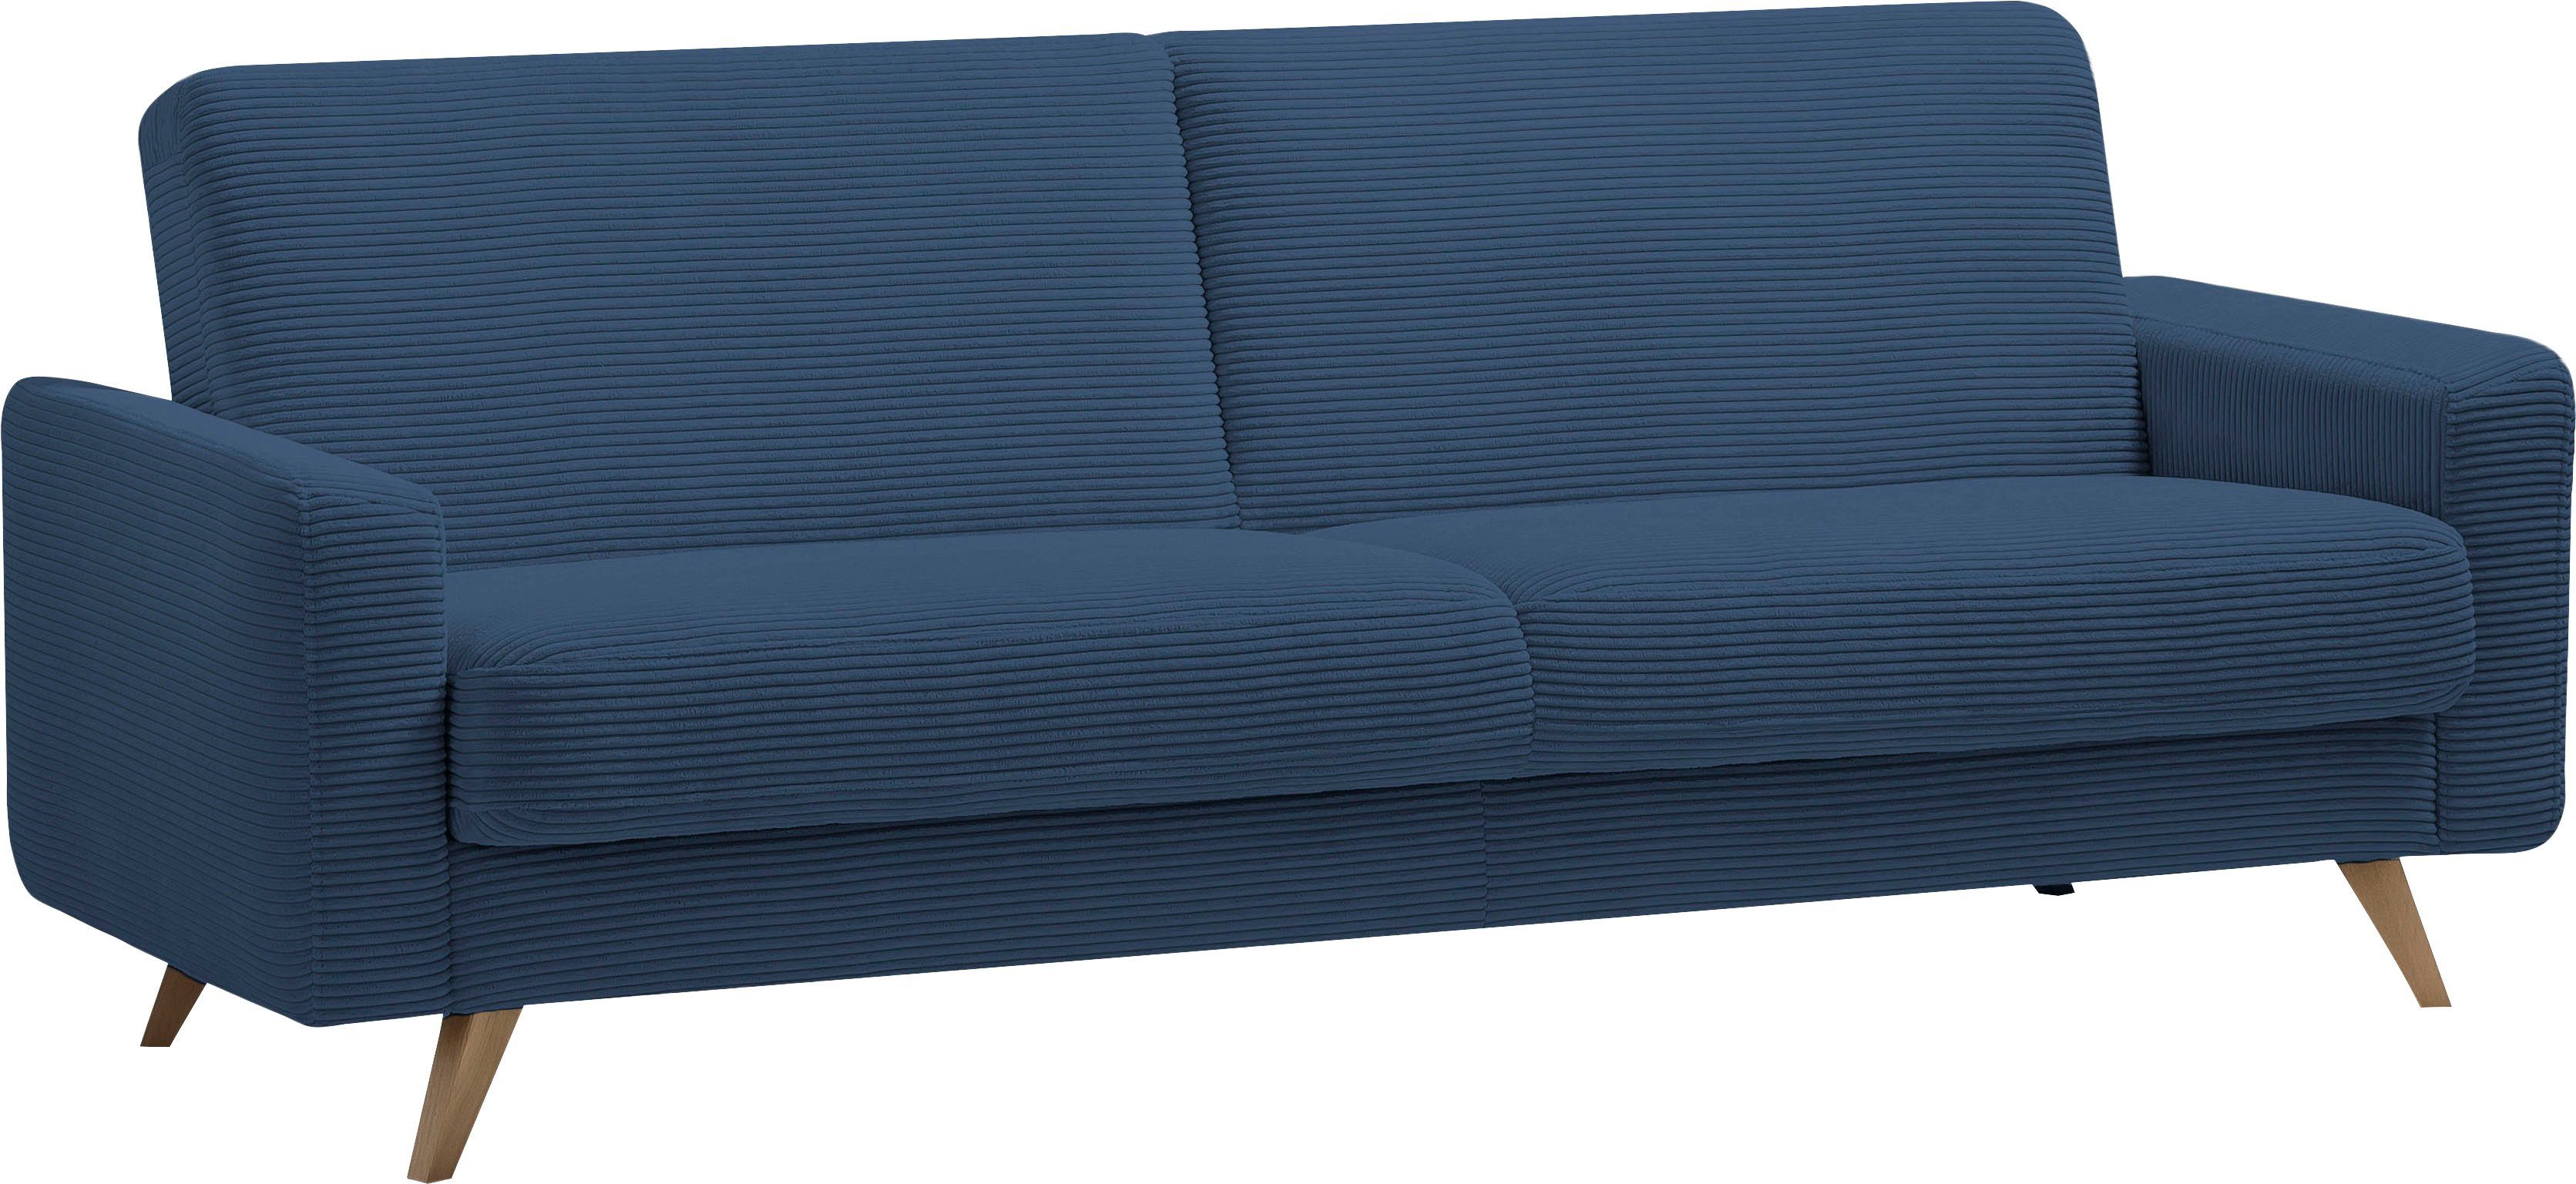 und Bettfunktion Inklusive navy sofa exxpo 3-Sitzer Bettkasten - Samso, fashion